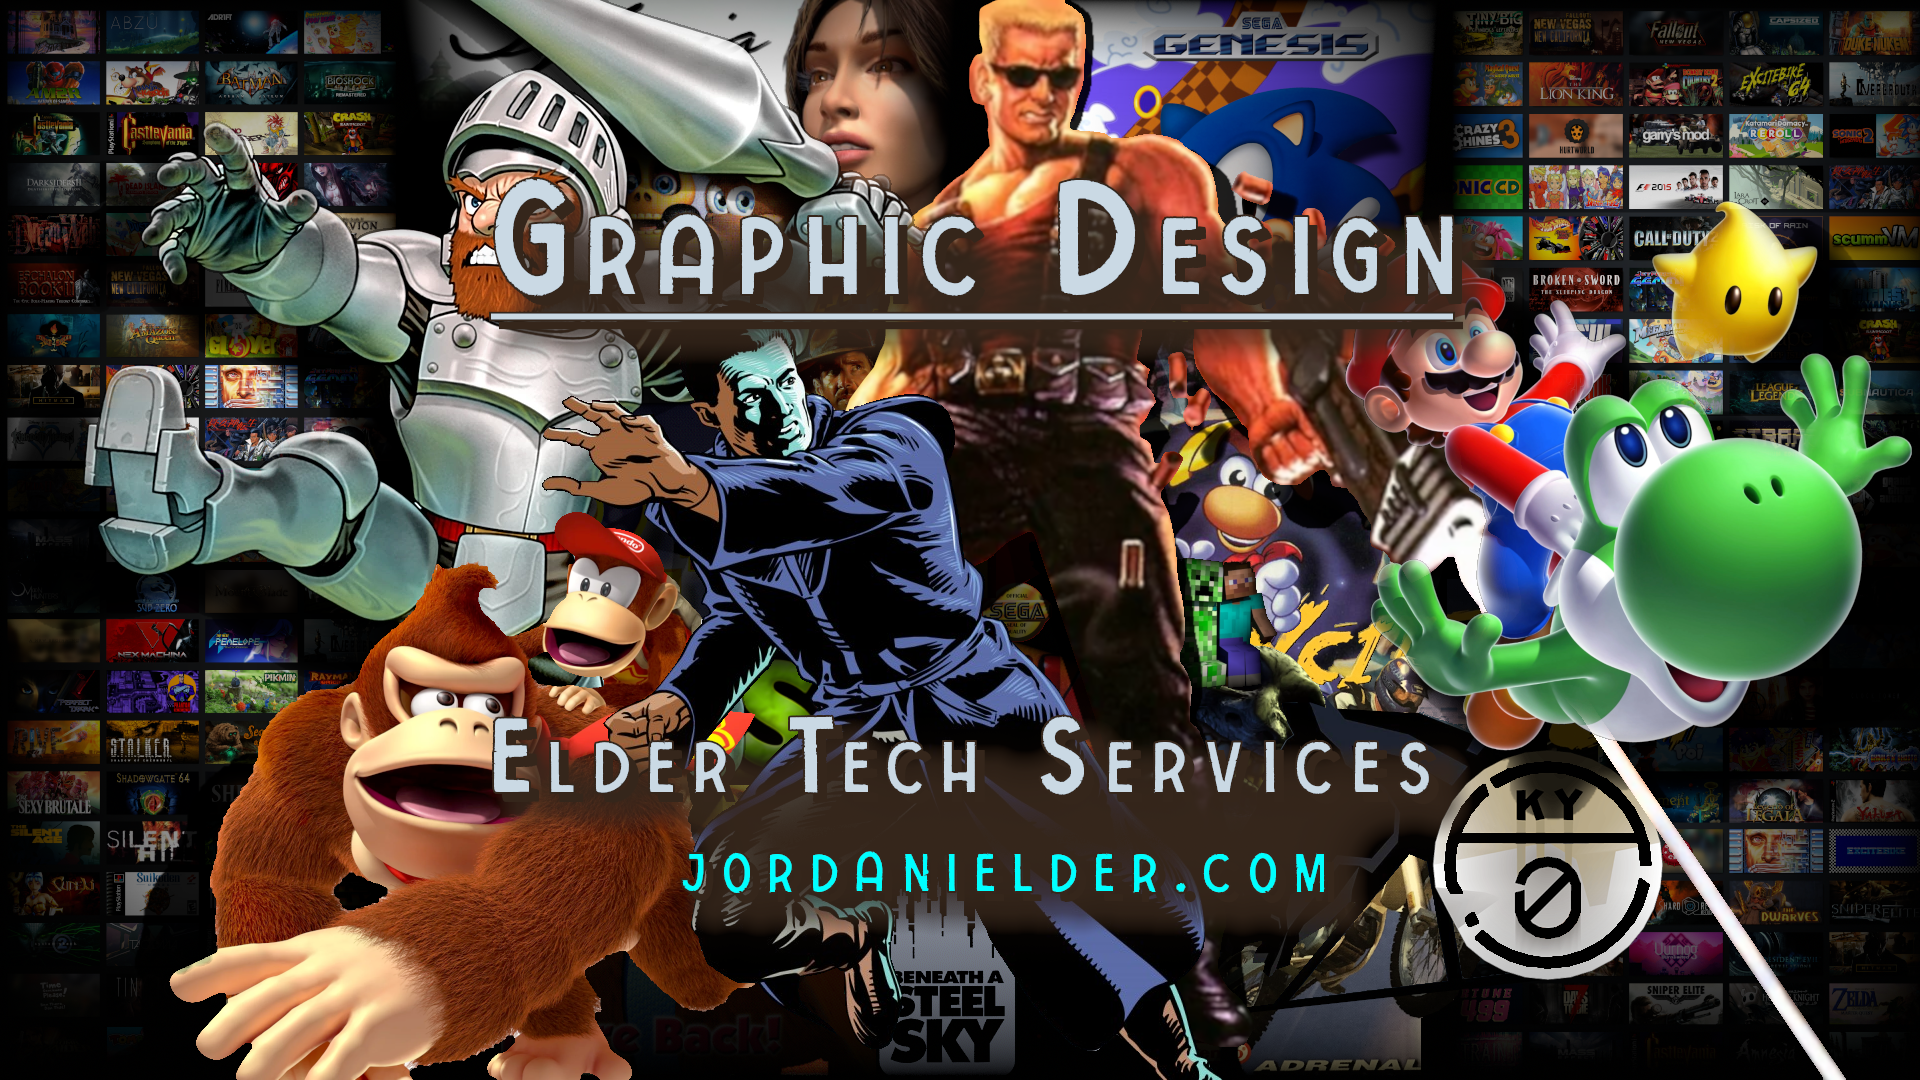 Contact Jordan Elder for Design Services